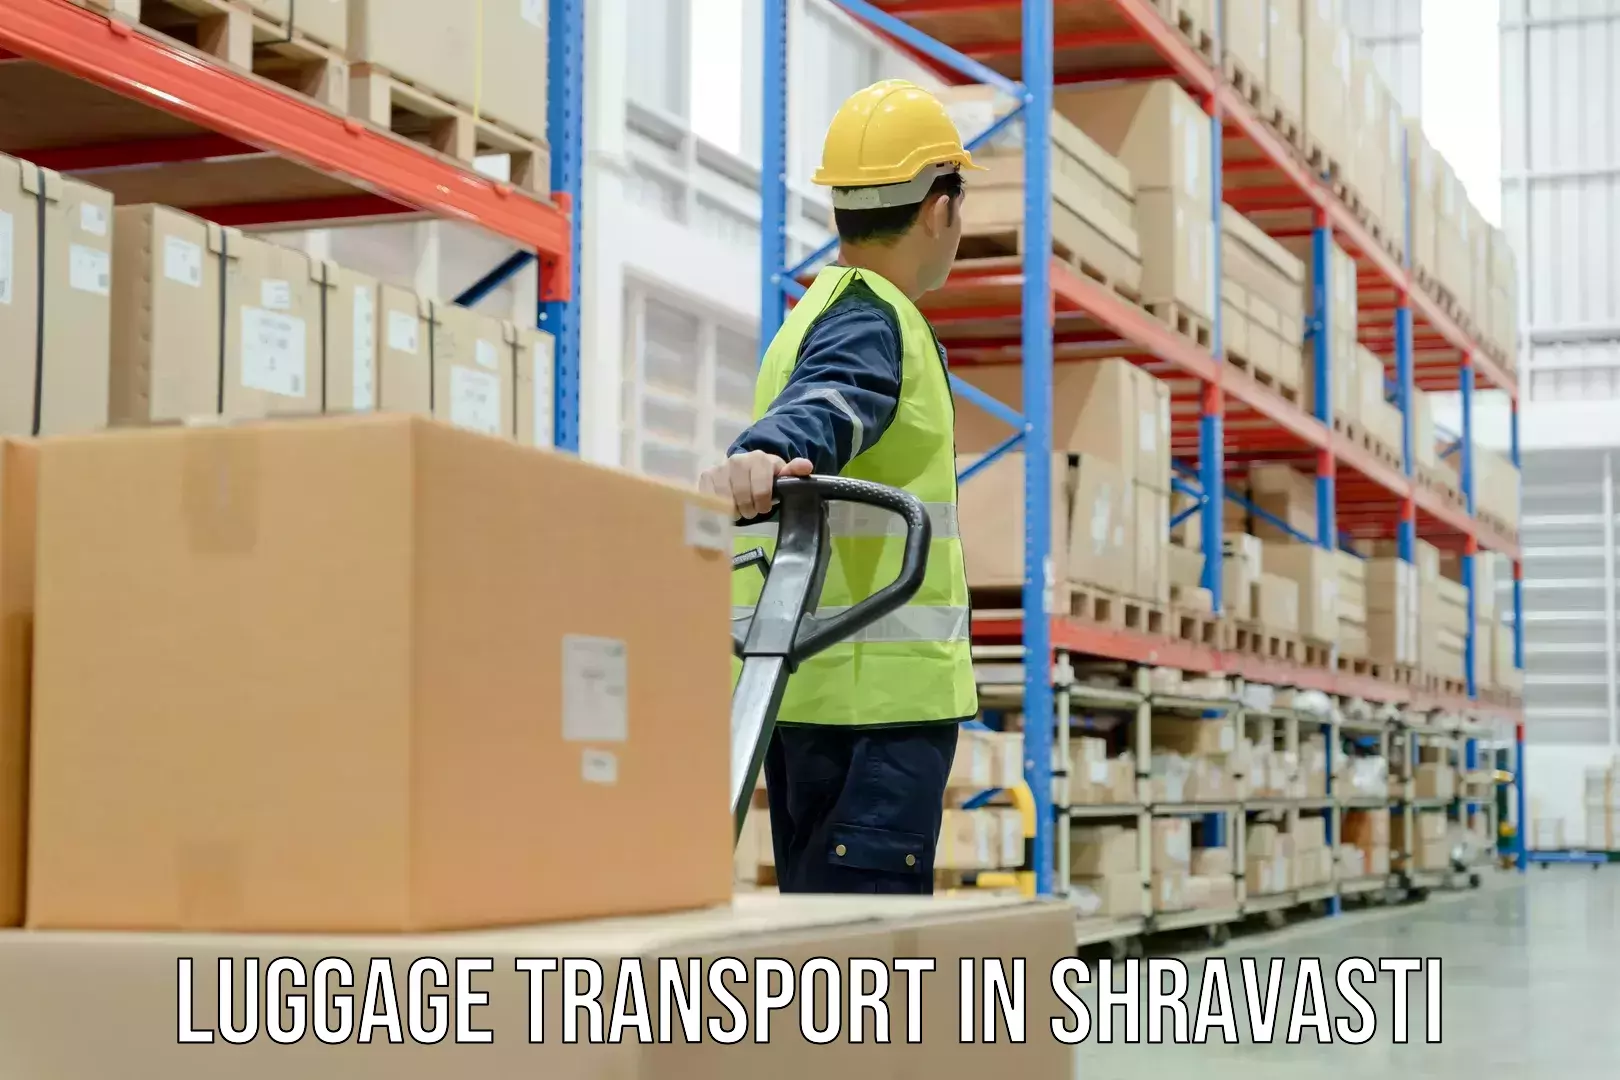 Luggage transport consultancy in Shravasti